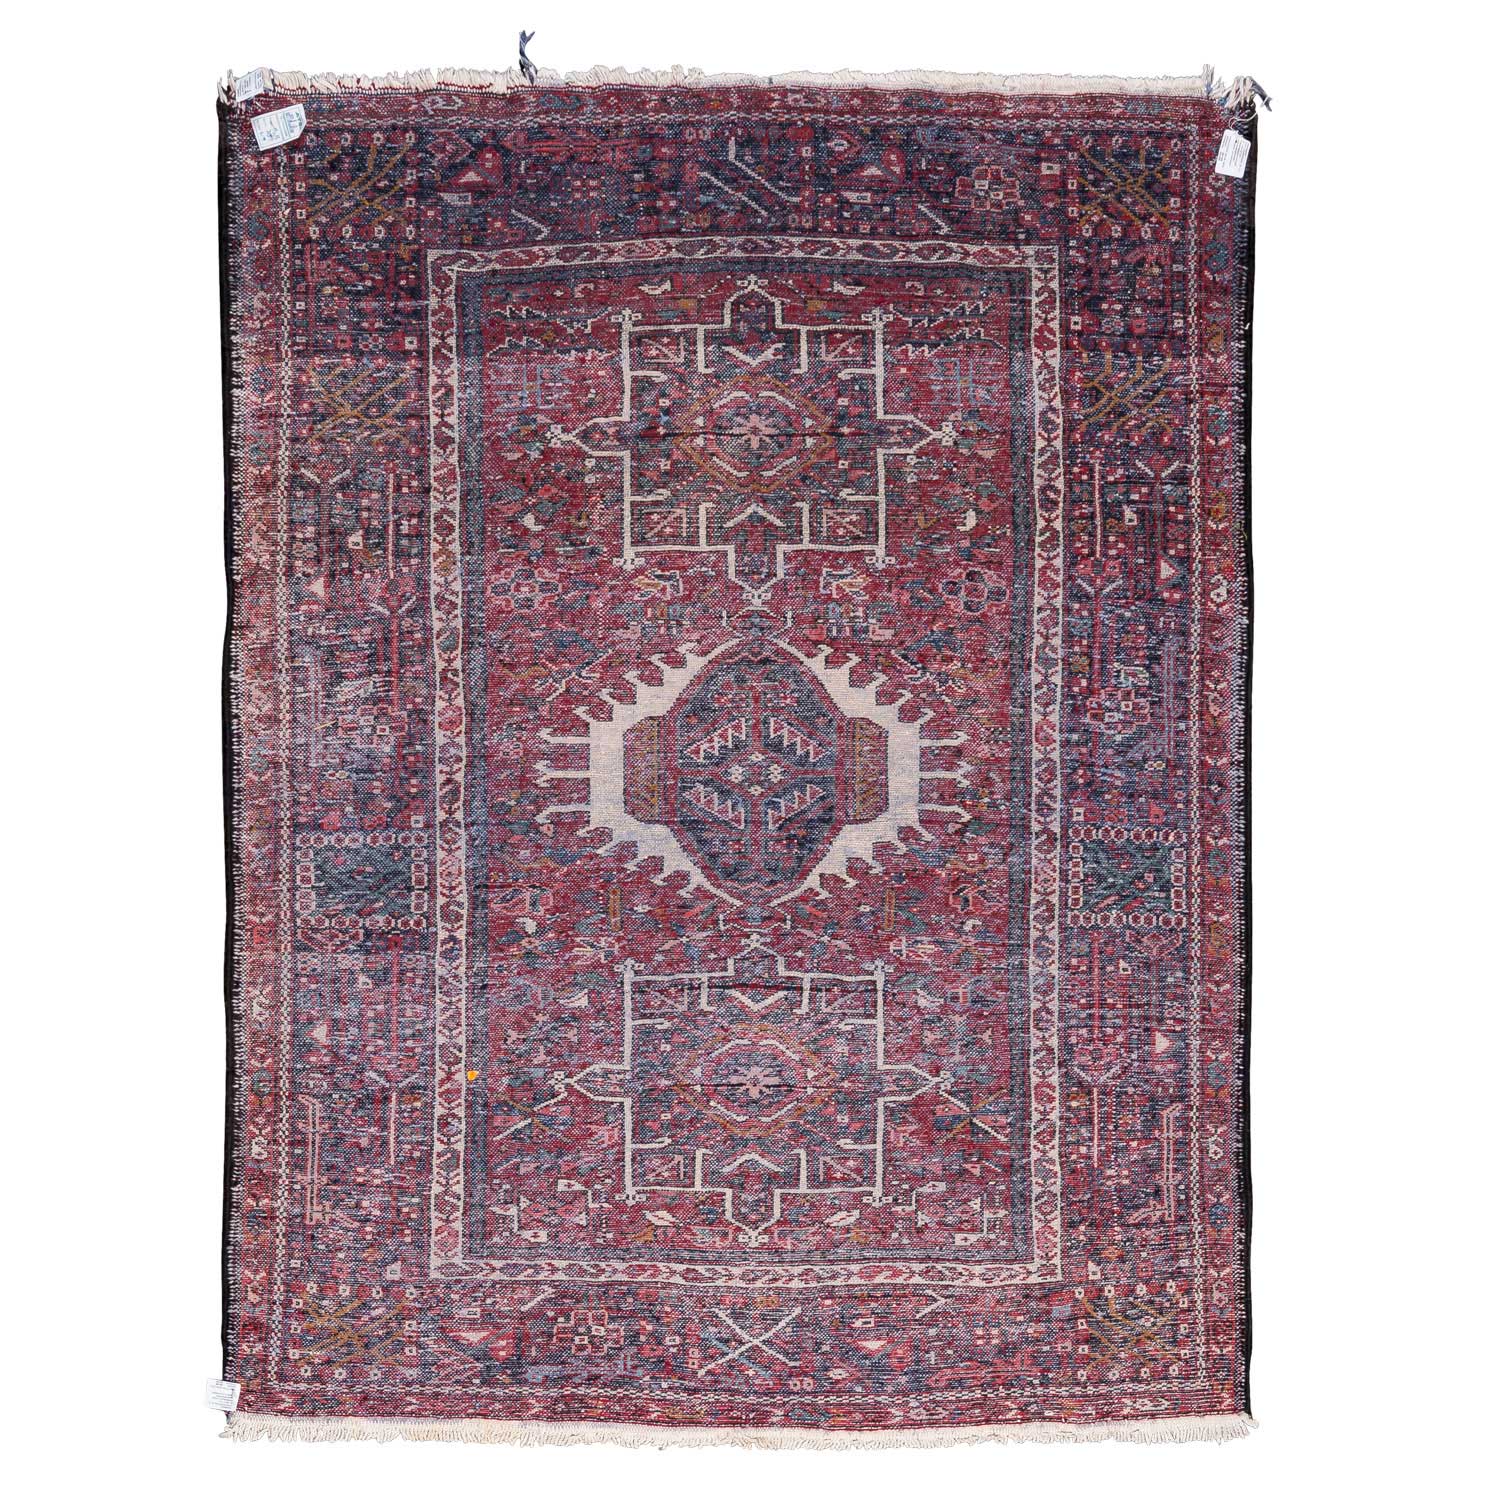 Orientteppich. "KORODIA"/PERSIEN, 20. Jh., ca. 185x147 cm. - Image 2 of 4